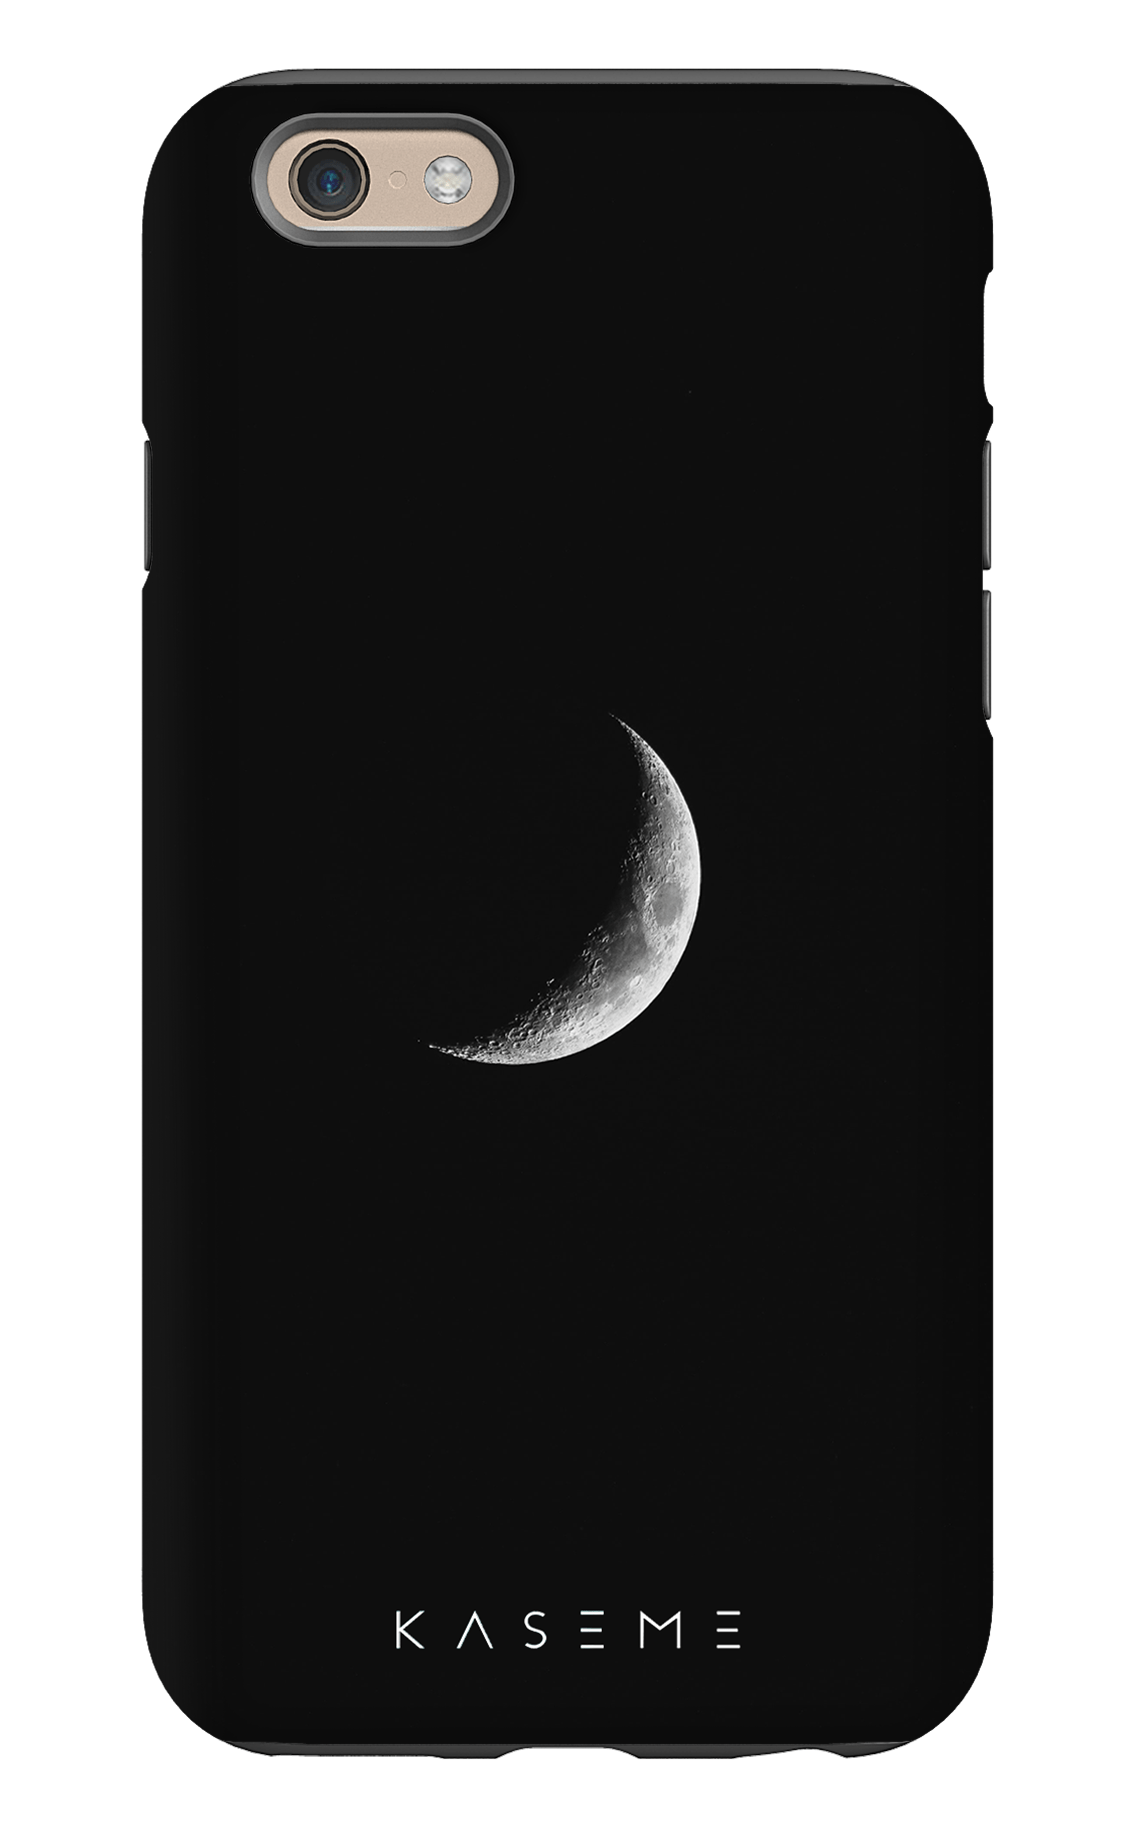 Shadows - iPhone 6/6s